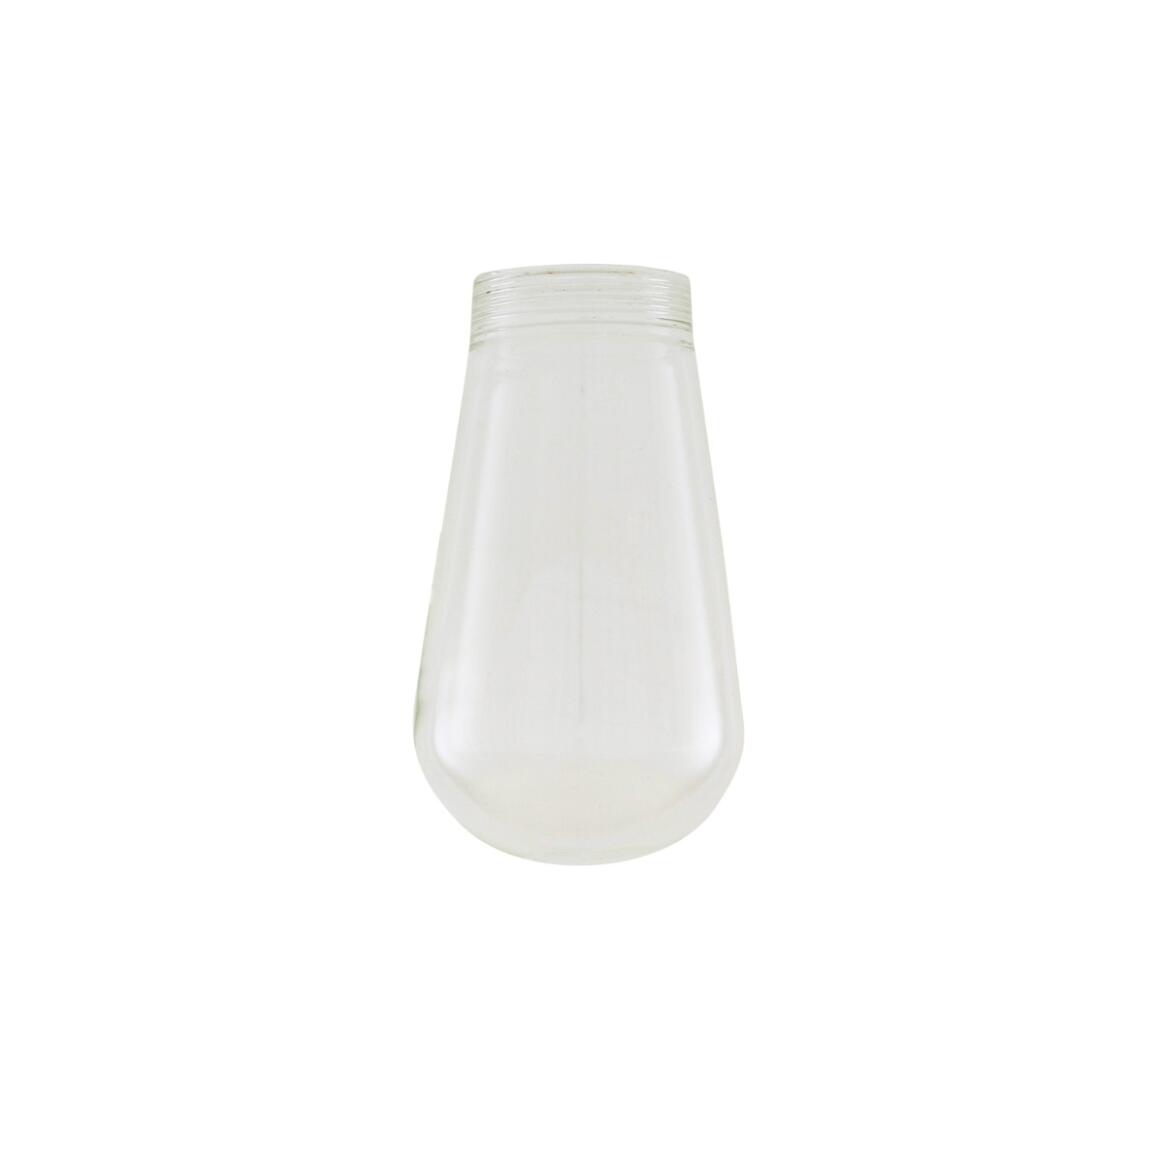 Mullan waterproof glass lamp shade replacement main product image